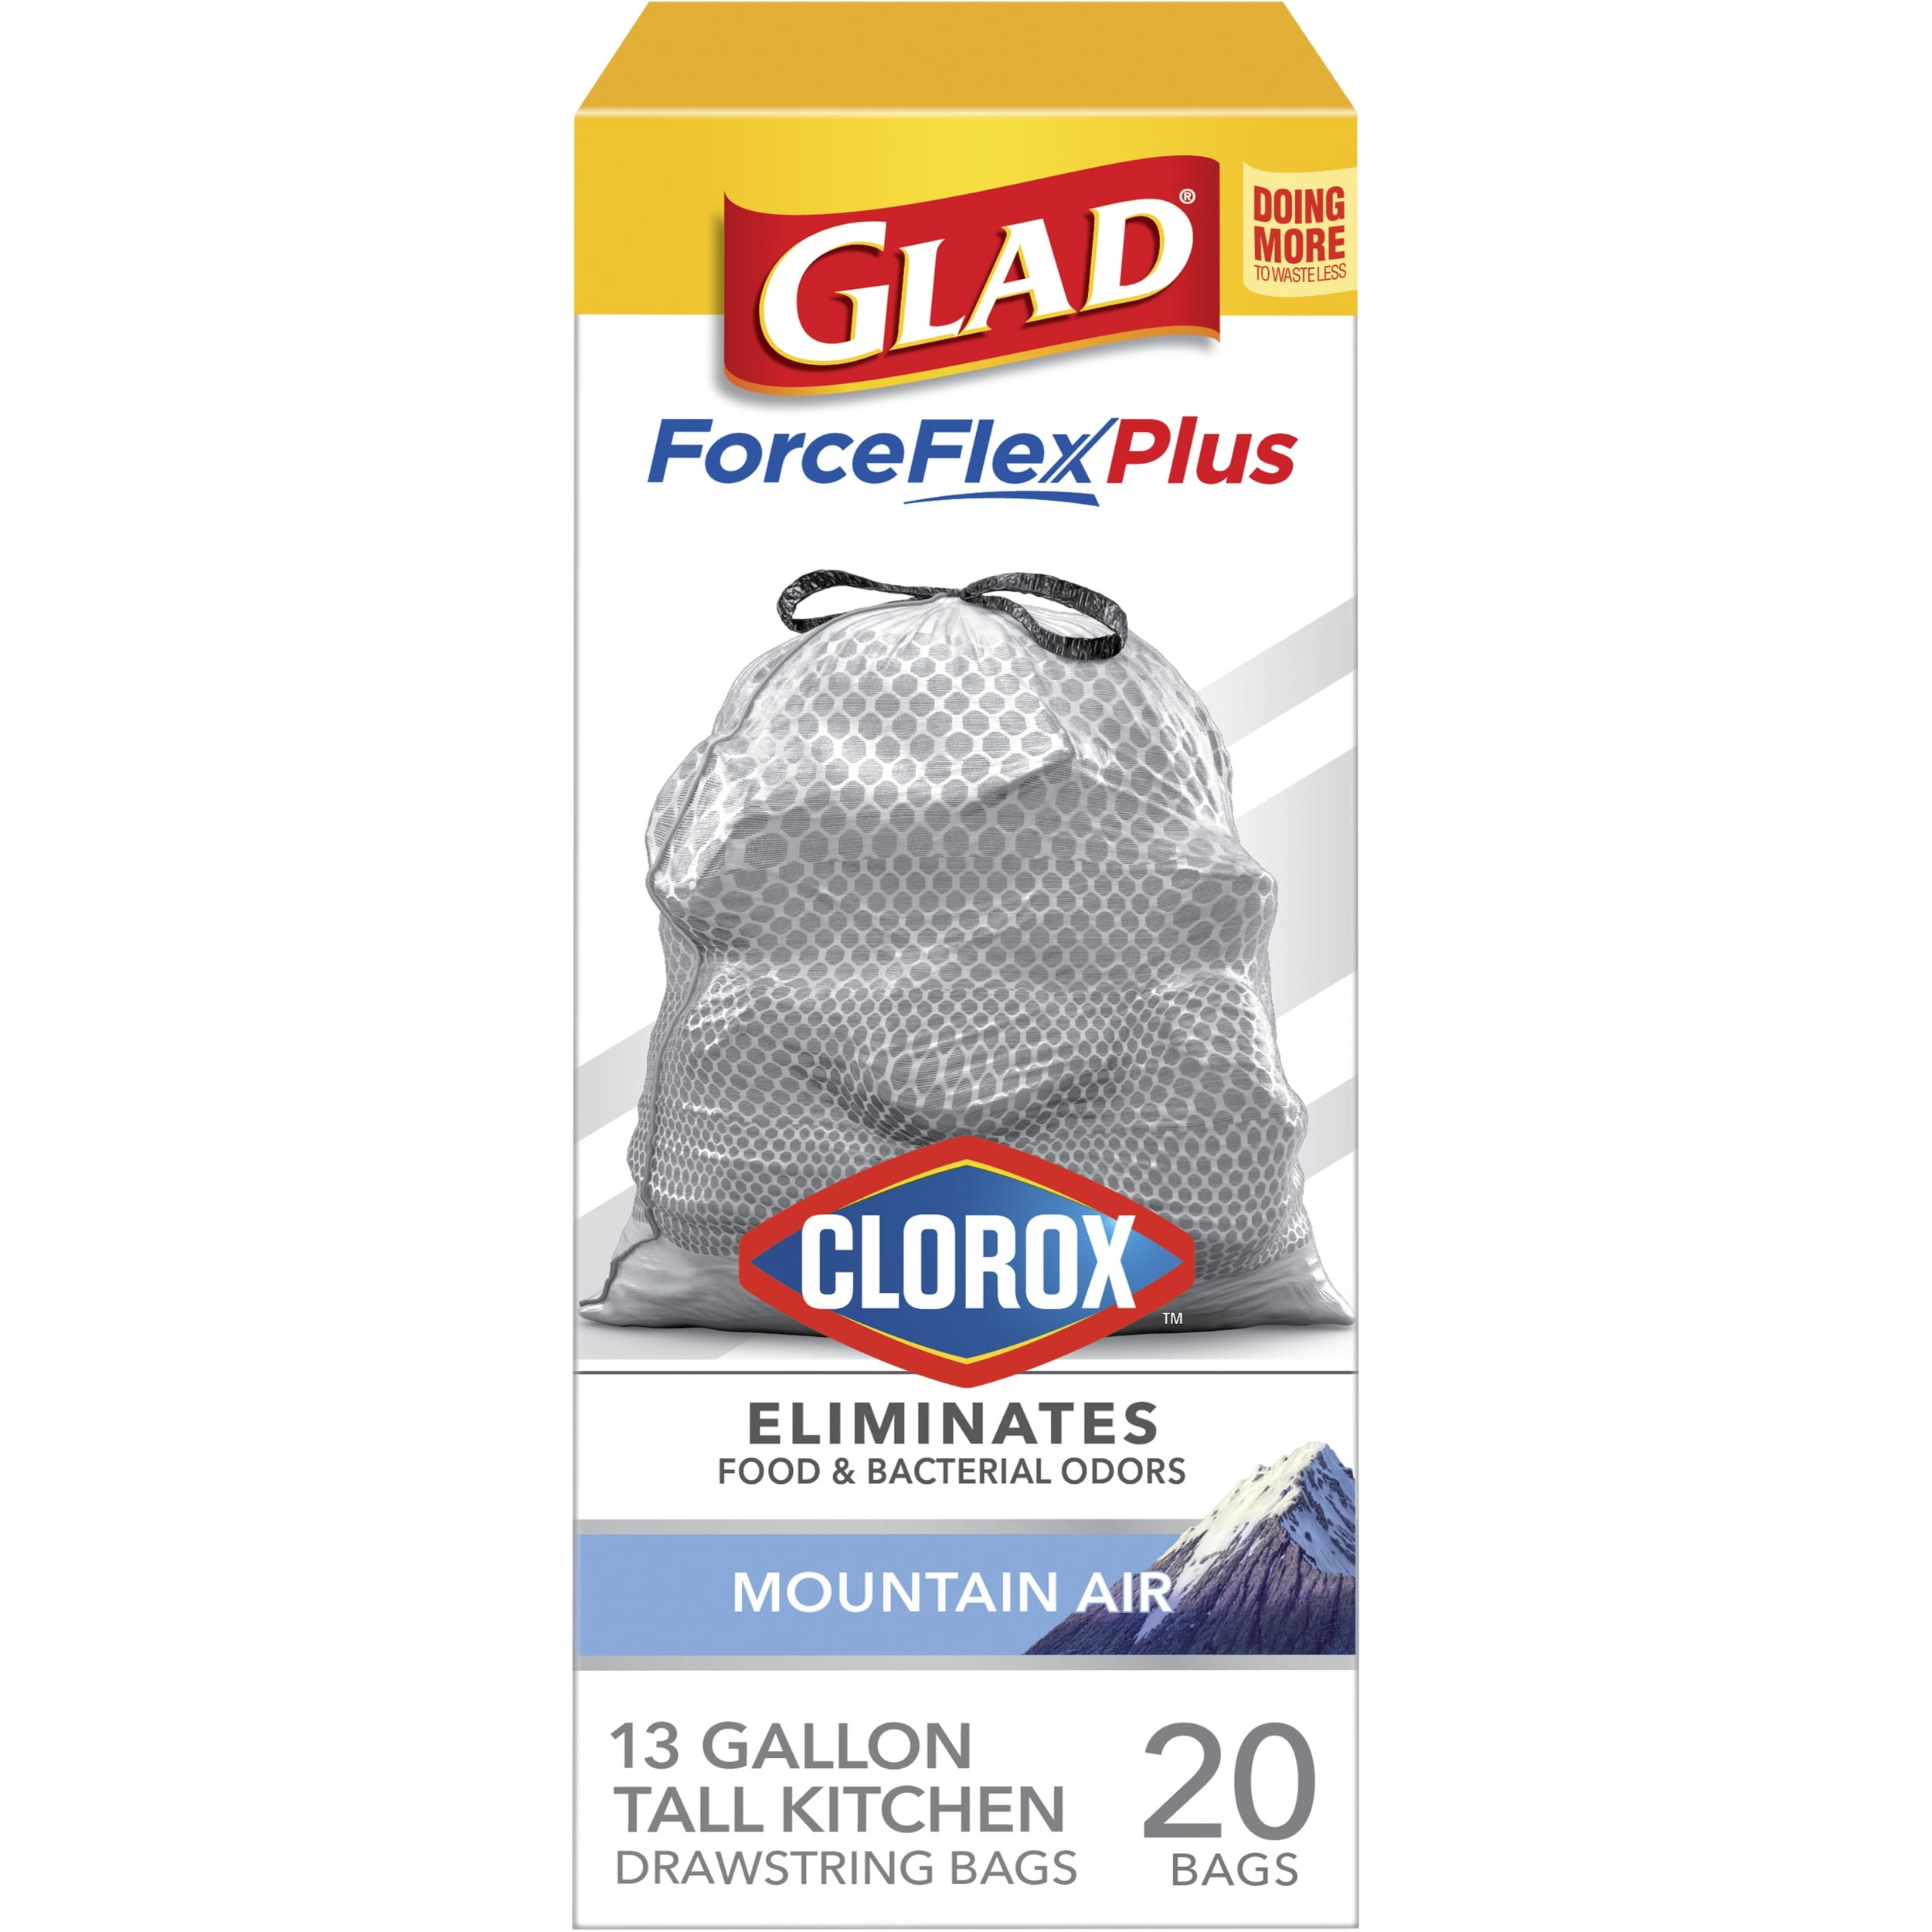 GLAD ForceFlexPlus XL X-Large Kitchen Drawstring Trash Bags - 20